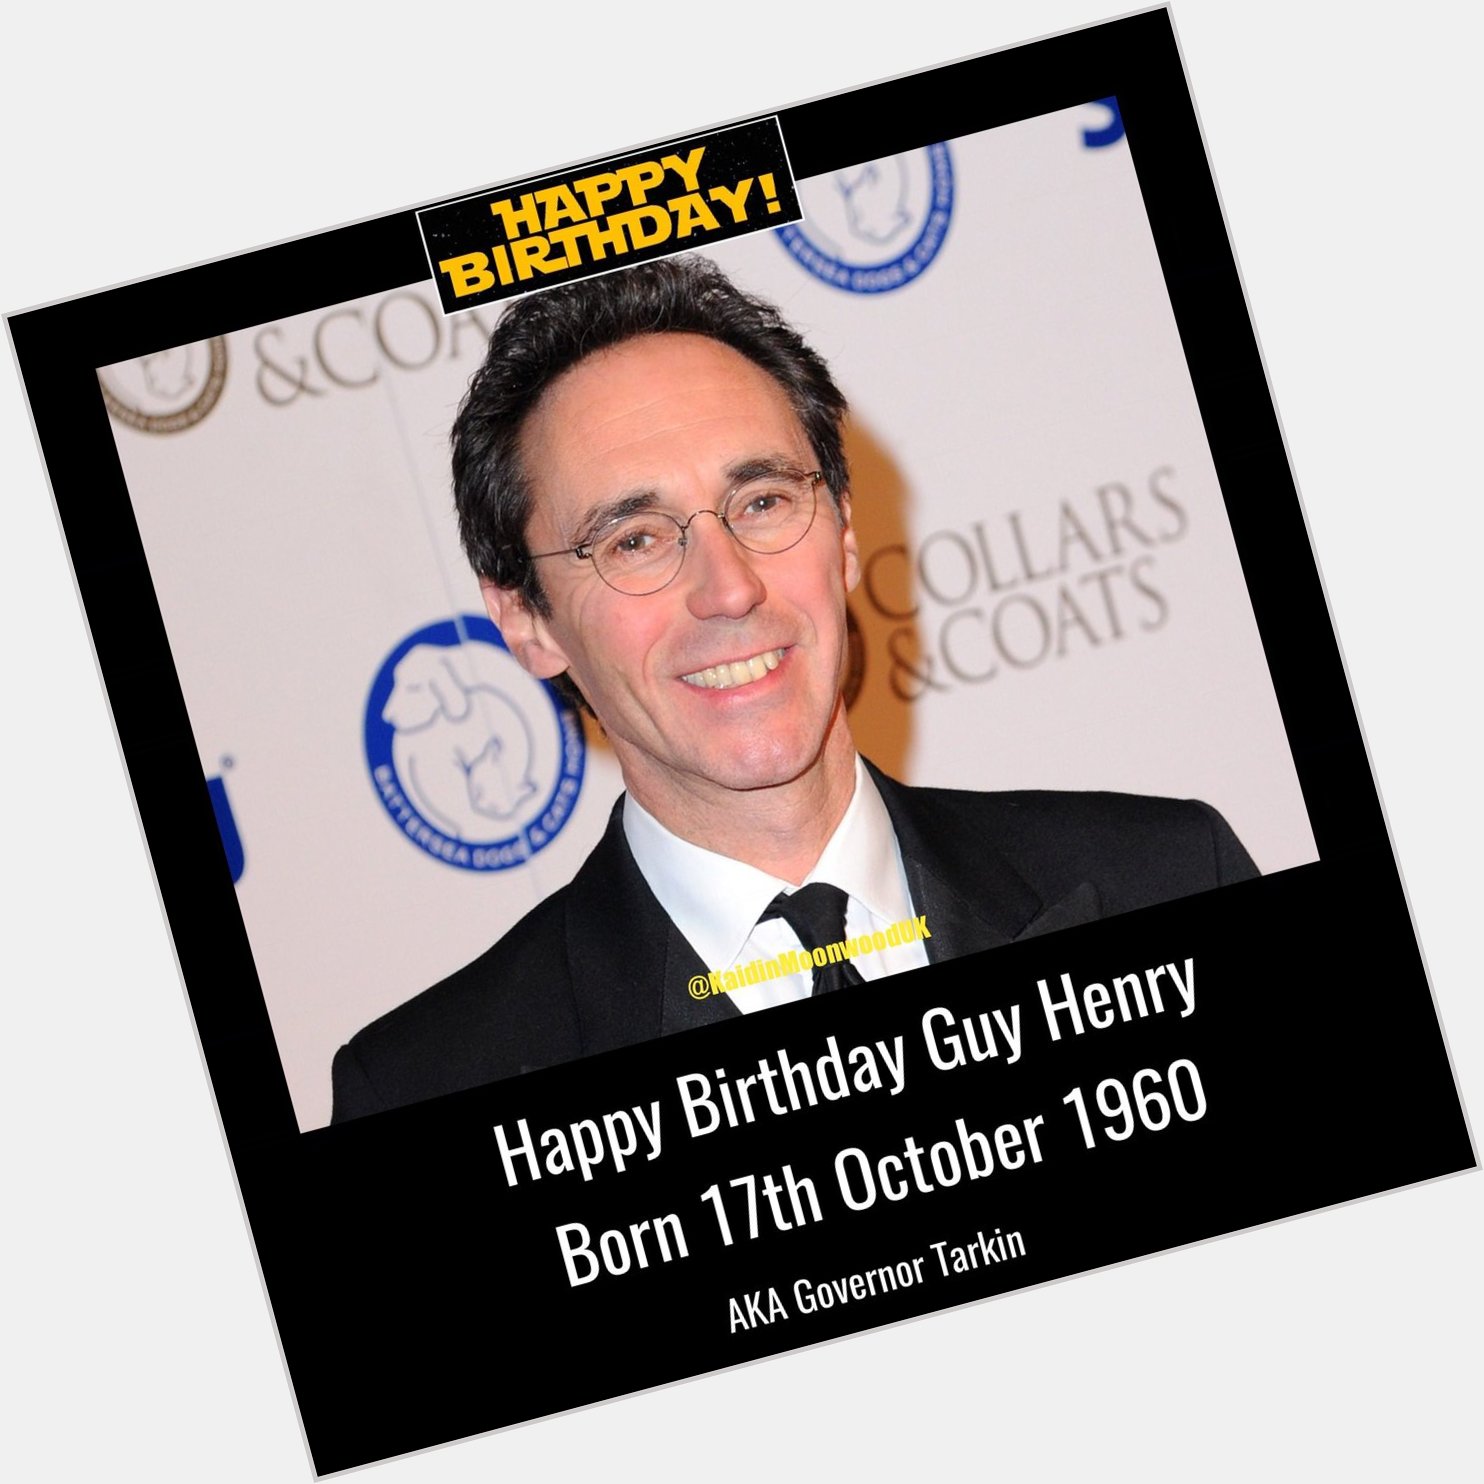 Happy Birthday Guy Henry aka Tarkin in Rogue One. Born 17th October 1960.   